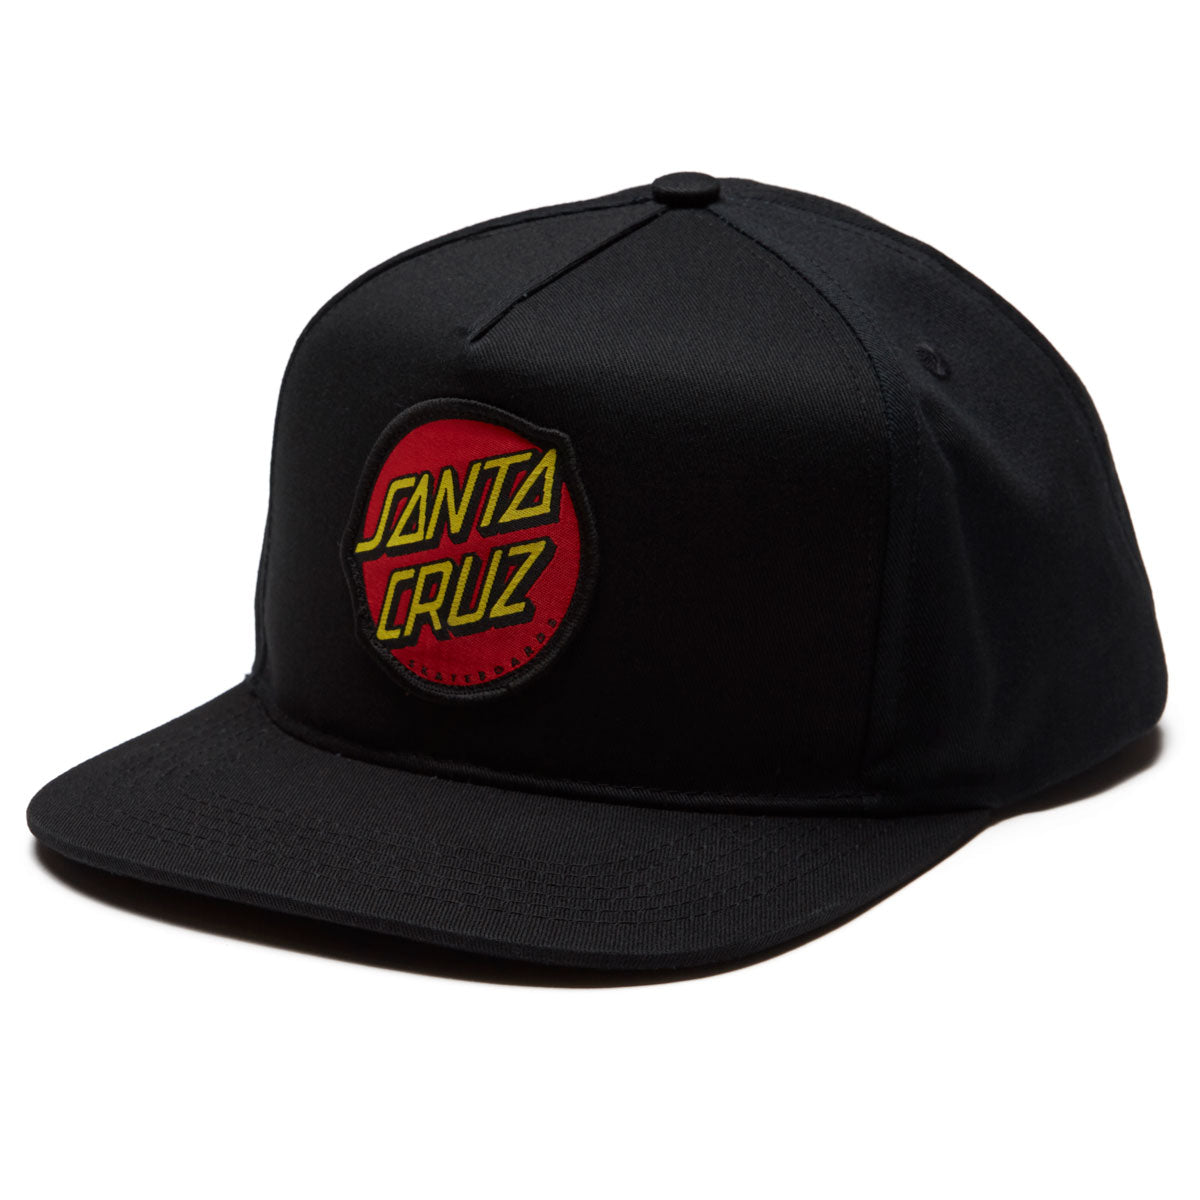 Santa Cruz Classic Snapback Mid Profile Hat - Black image 1